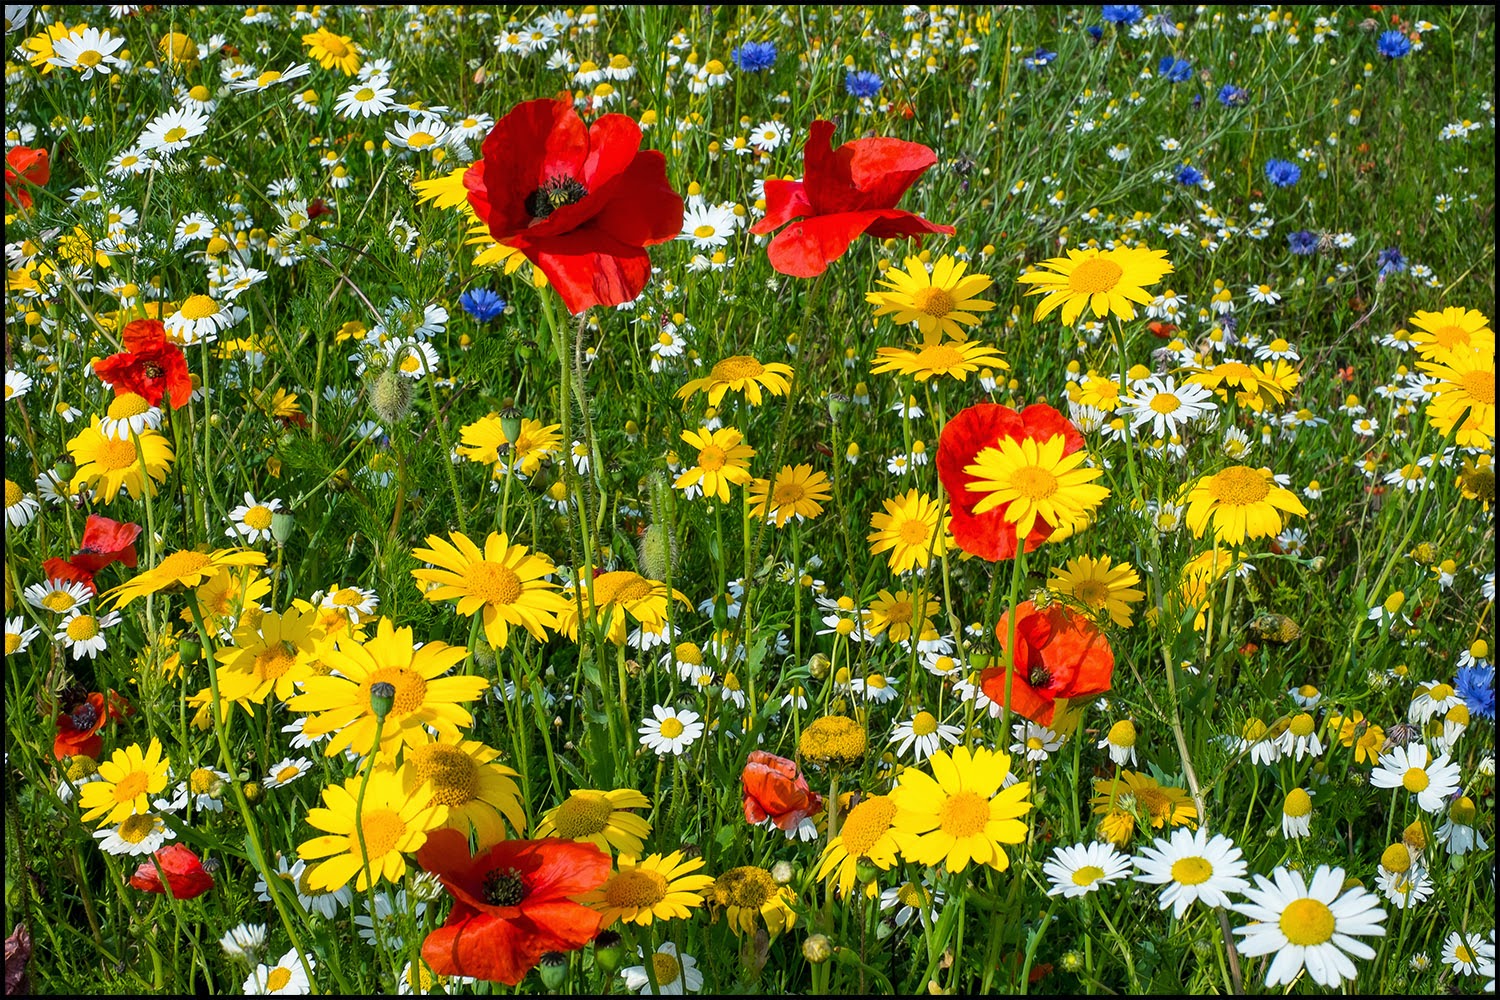 Digital Images: Wildflower meadows at Fir Tree Farm